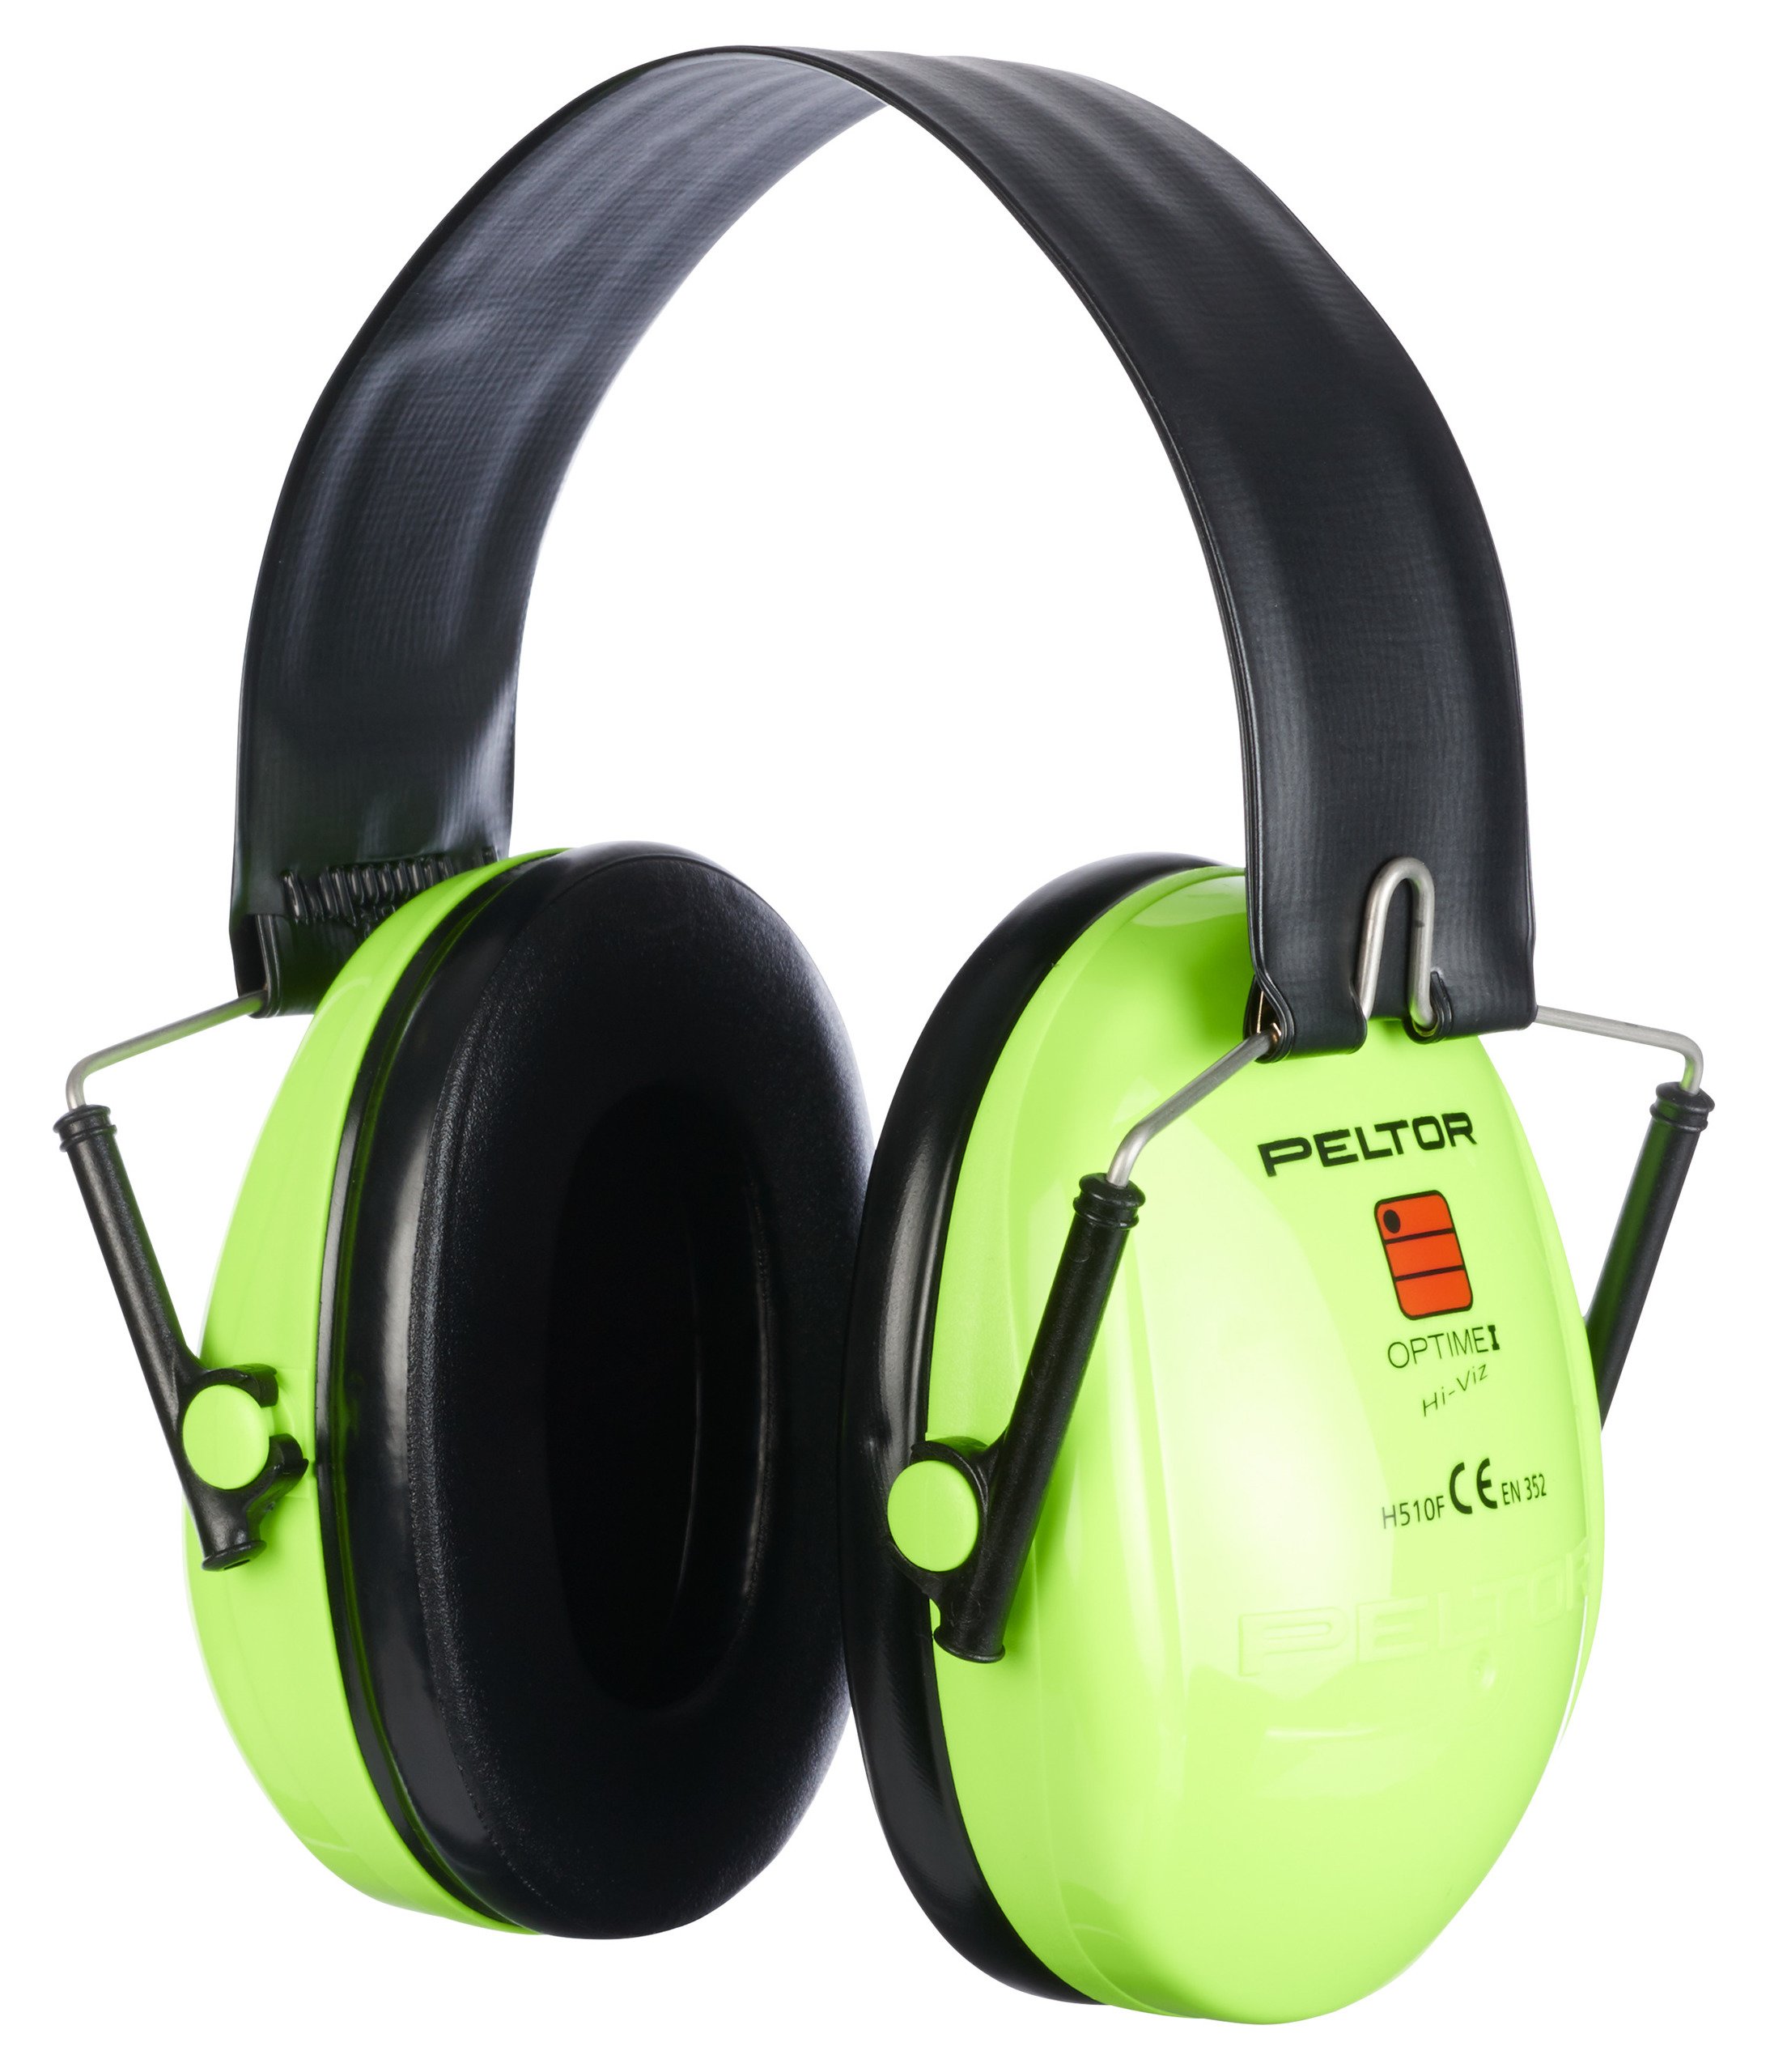 Peltor Gehörschutz Optime I mit Kopfbügel (H510A)